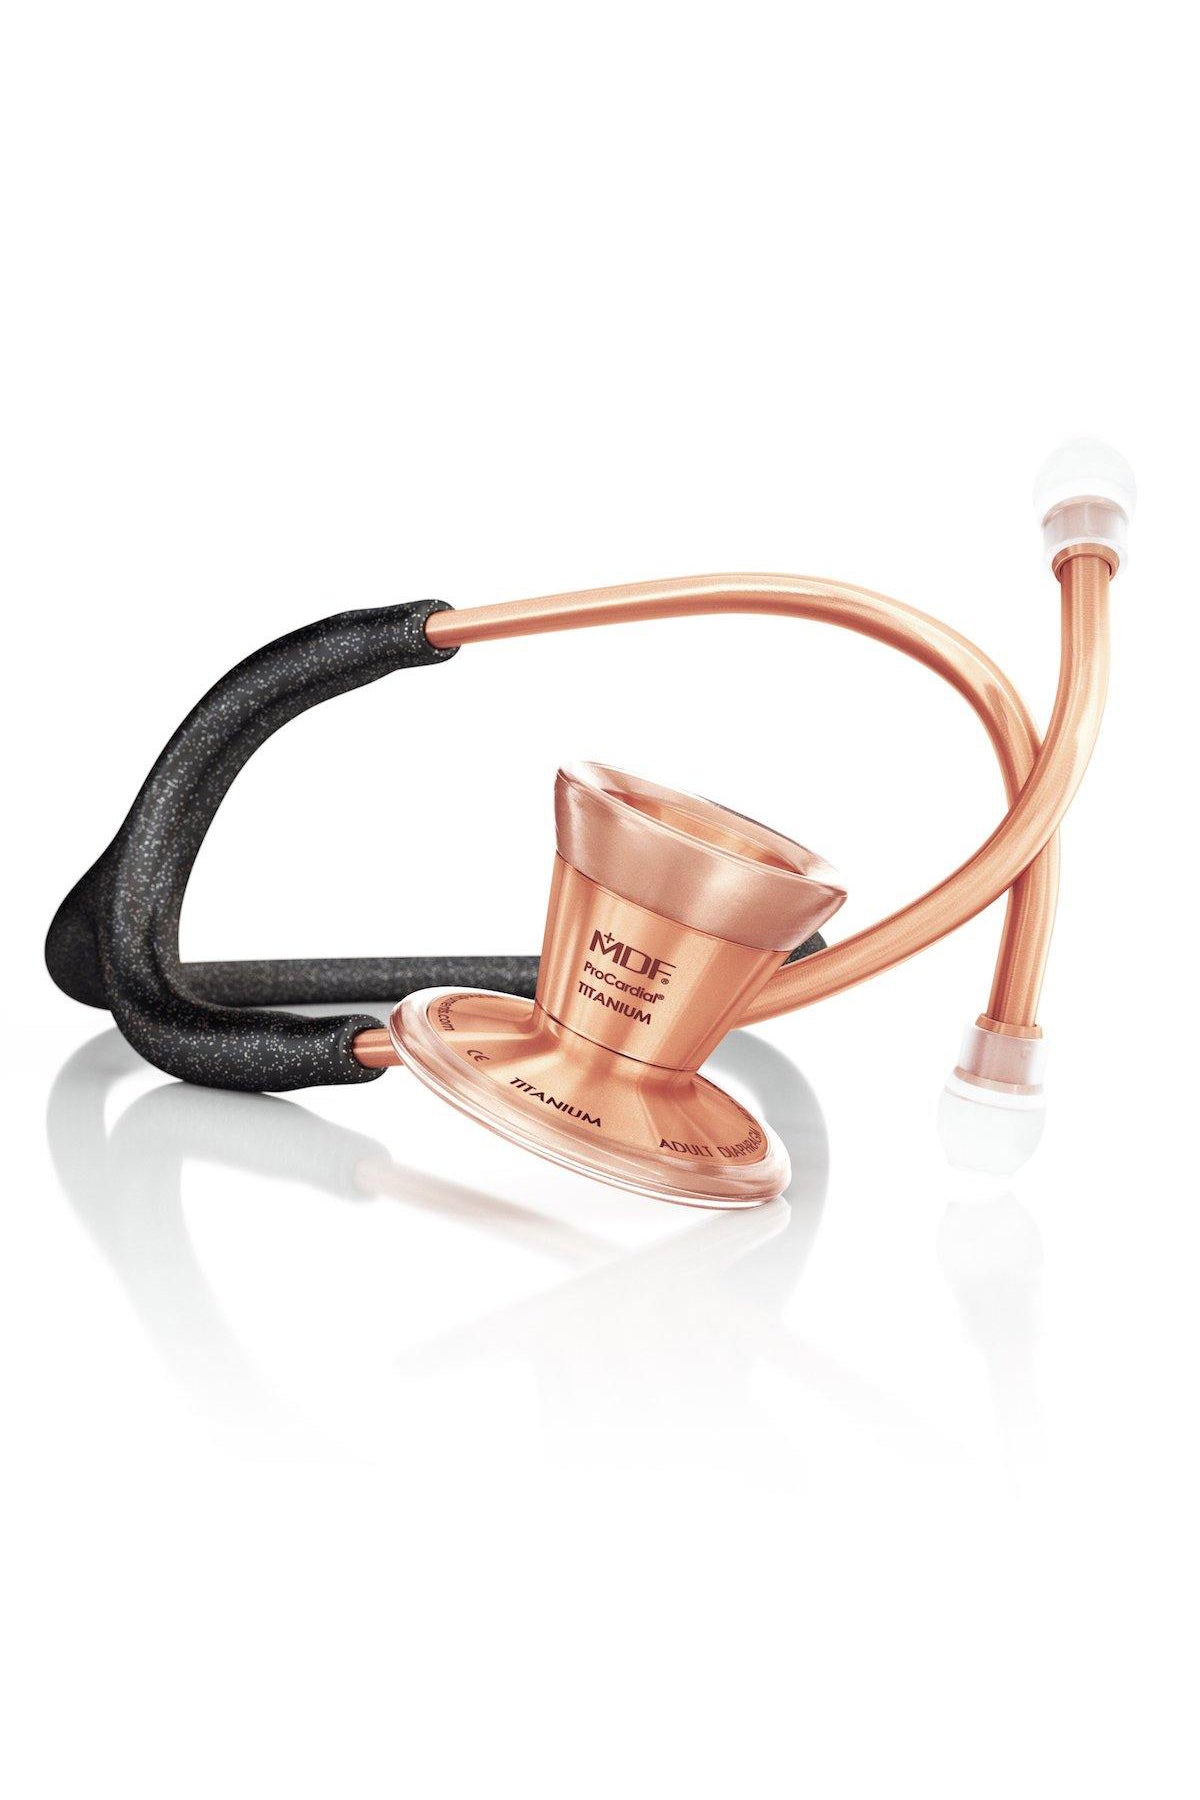 Procardial® Titanium Cardiology Stethoscope - Black Glitter Rose Gold